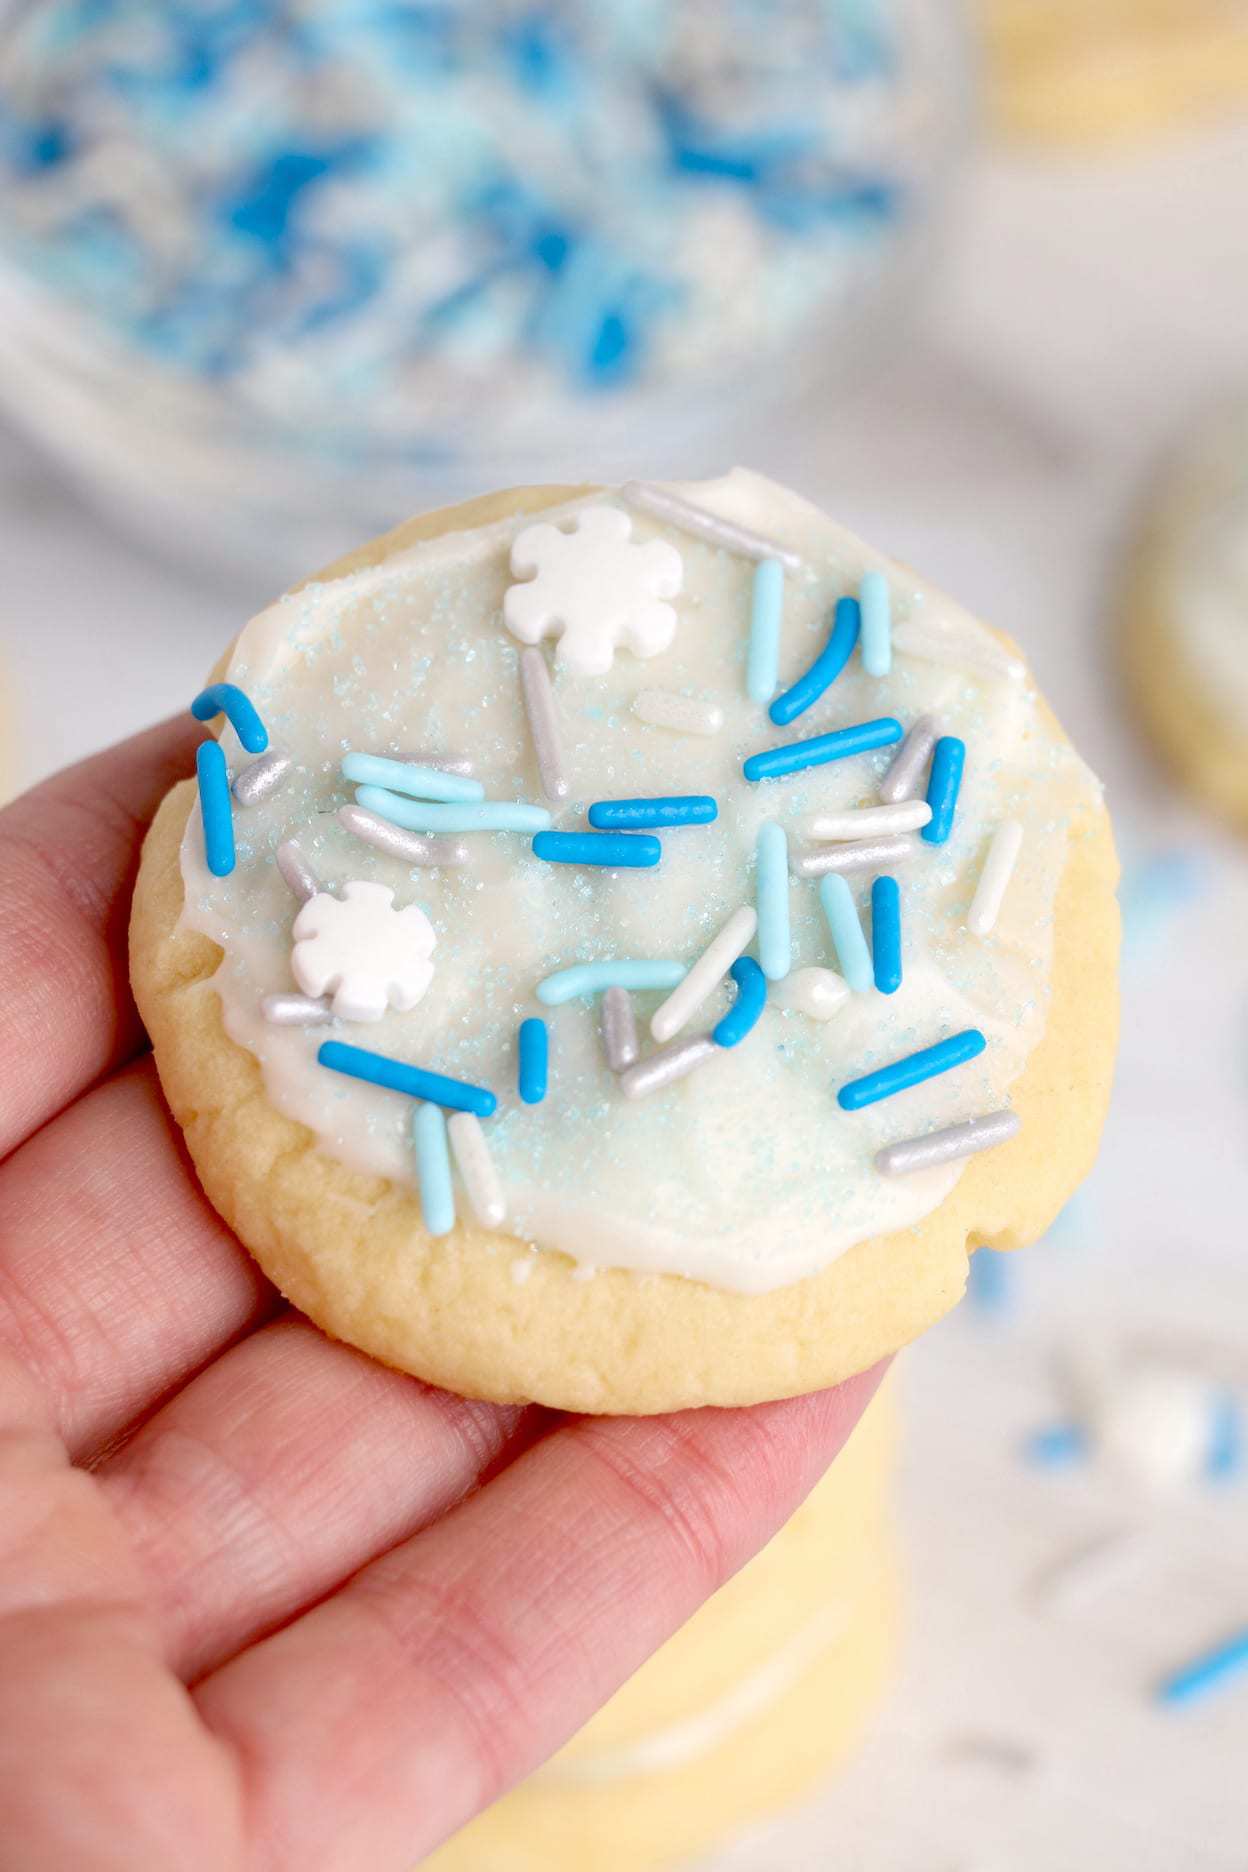 Meltaway cookie with blue Christmas sprinkles on top being held in hand.